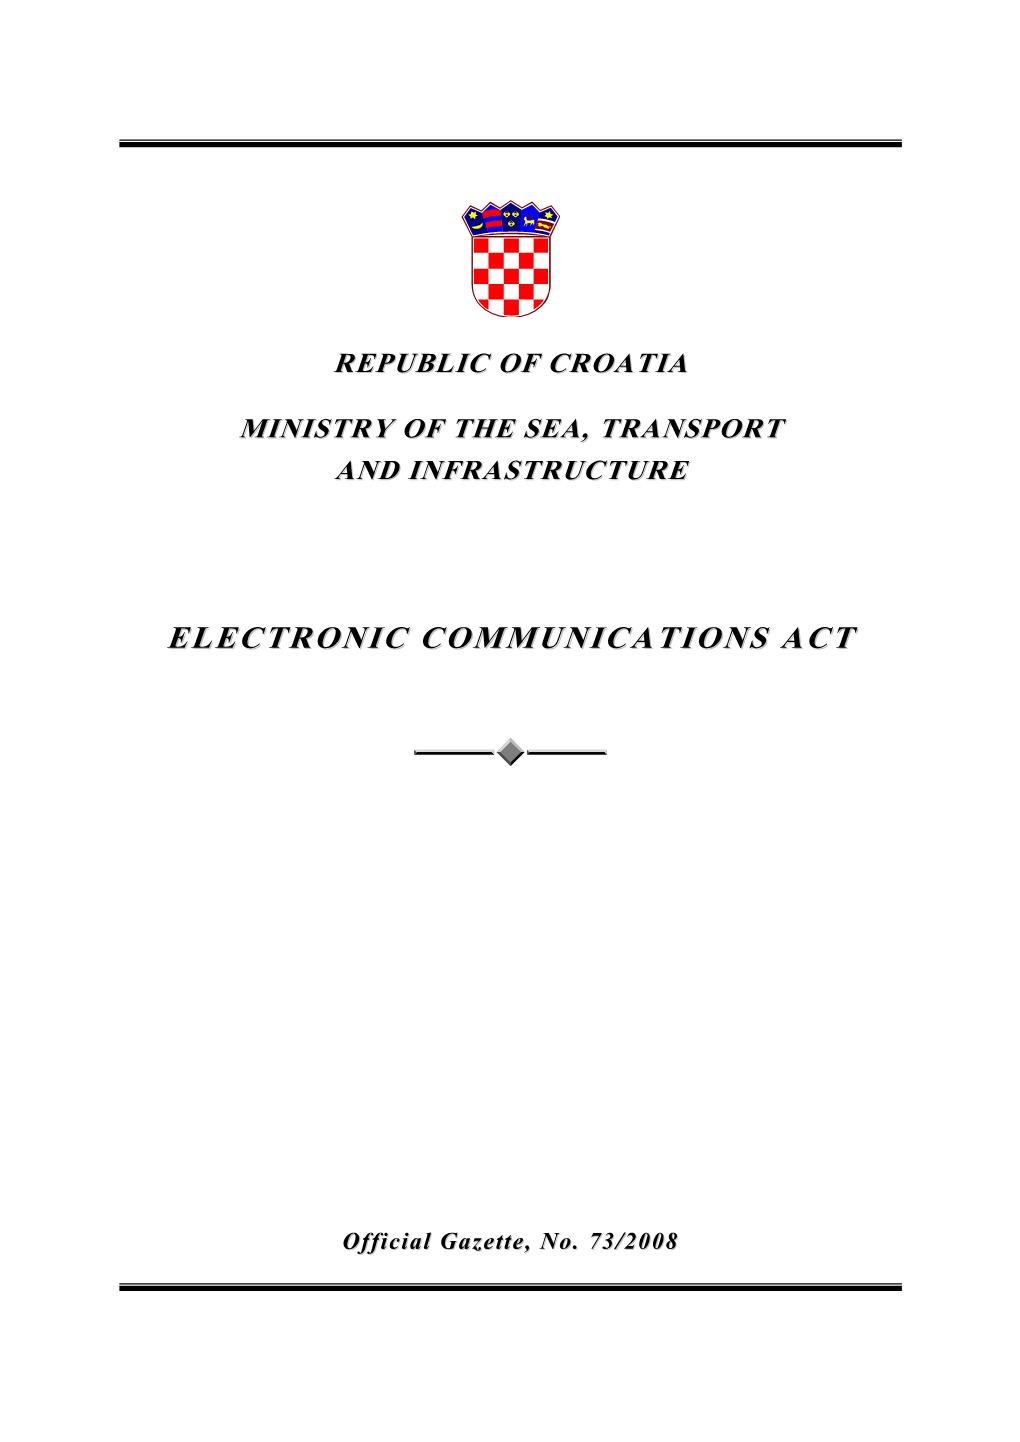 Electronic Communications Act